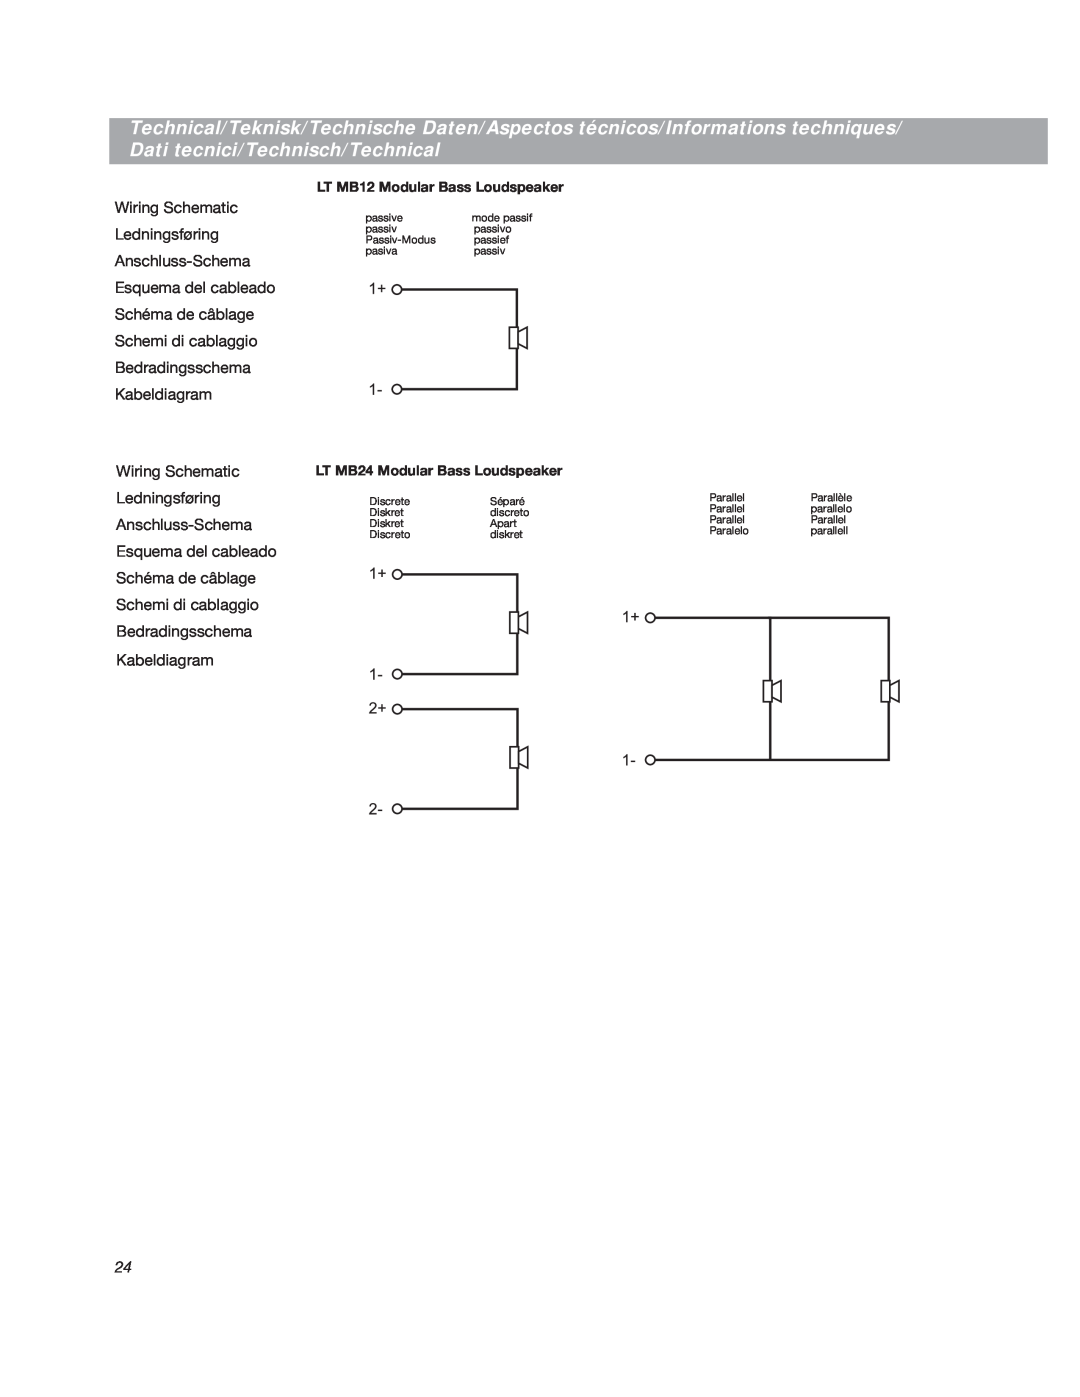 Bose LT6403 Wiring Schematic, Ledningsføring, Anschluss-Schema, Esquema del cableado, Schéma de câblage, Bedradingsschema 